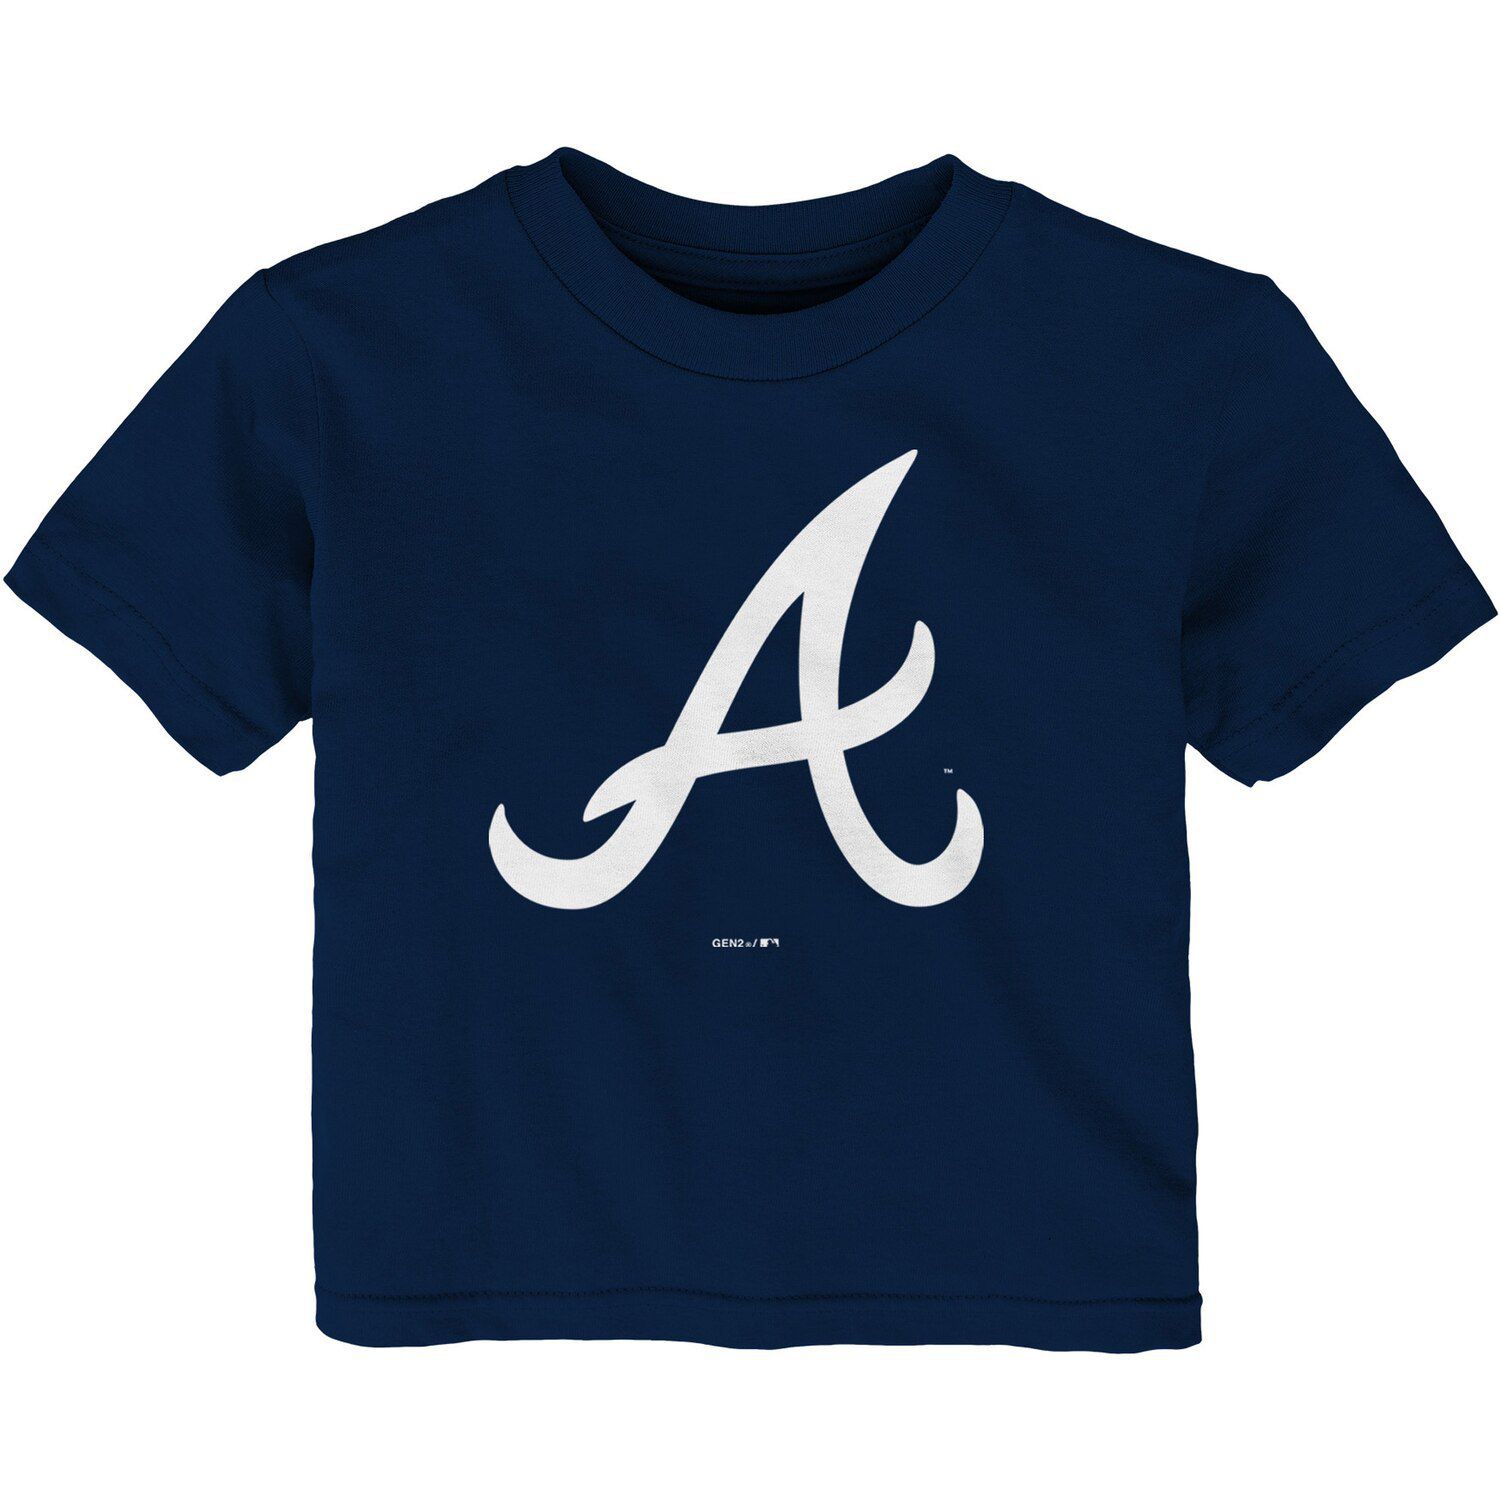 Toddler Fanatics Branded Heathered Gray Atlanta Braves 2021 World Series Champions Locker Room T-Shirt